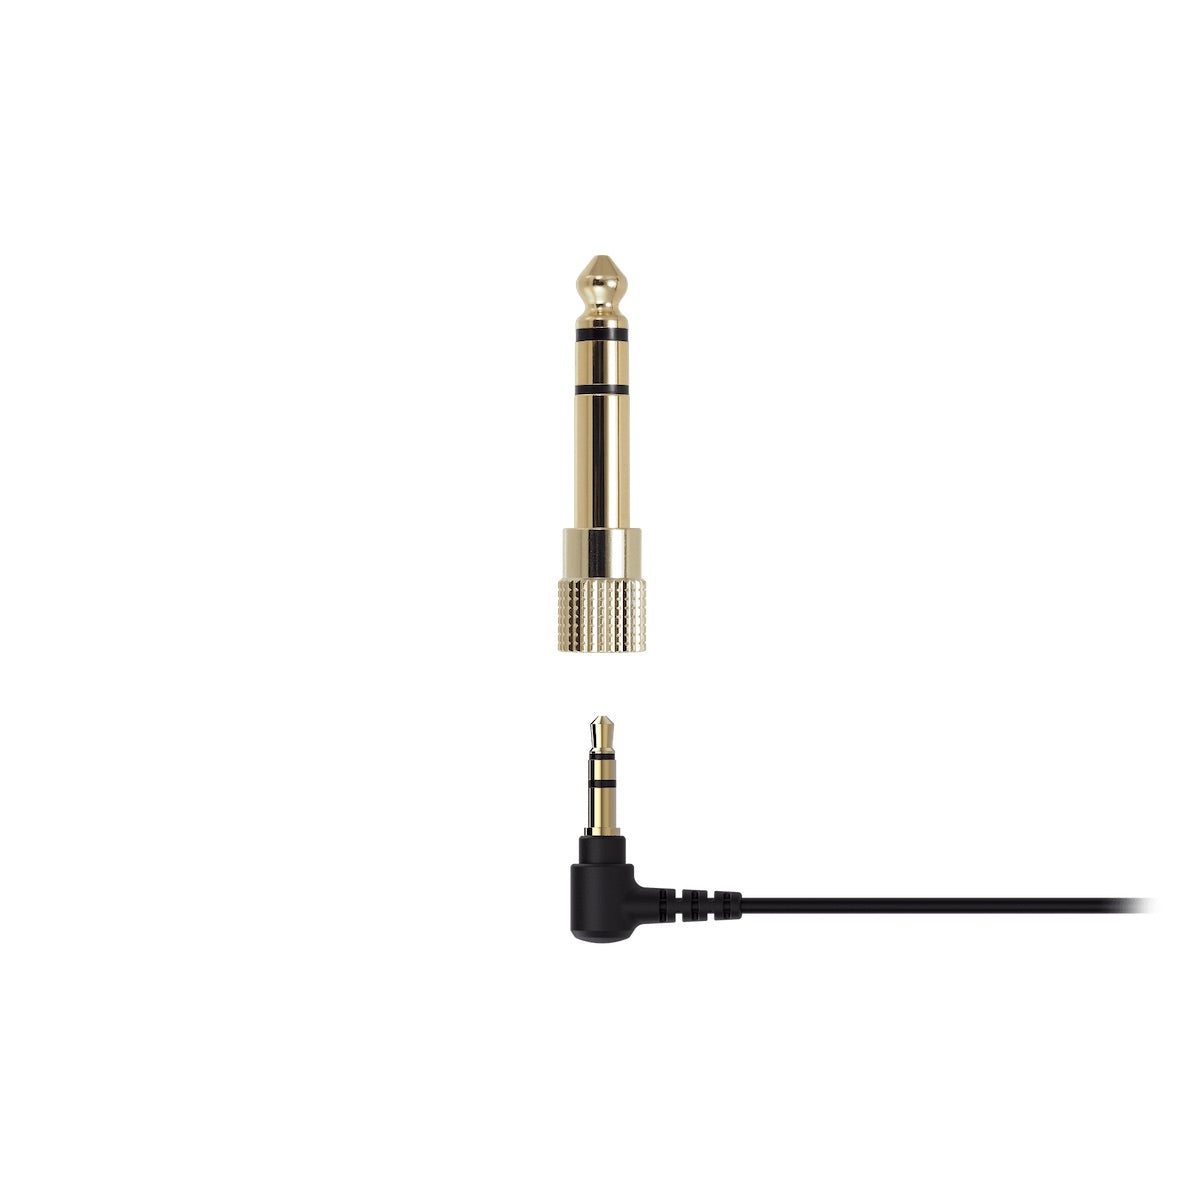 Audio-Technica ATH-E40 - Professional In-Ear Monitor Headphones, 1/4-inch adapter